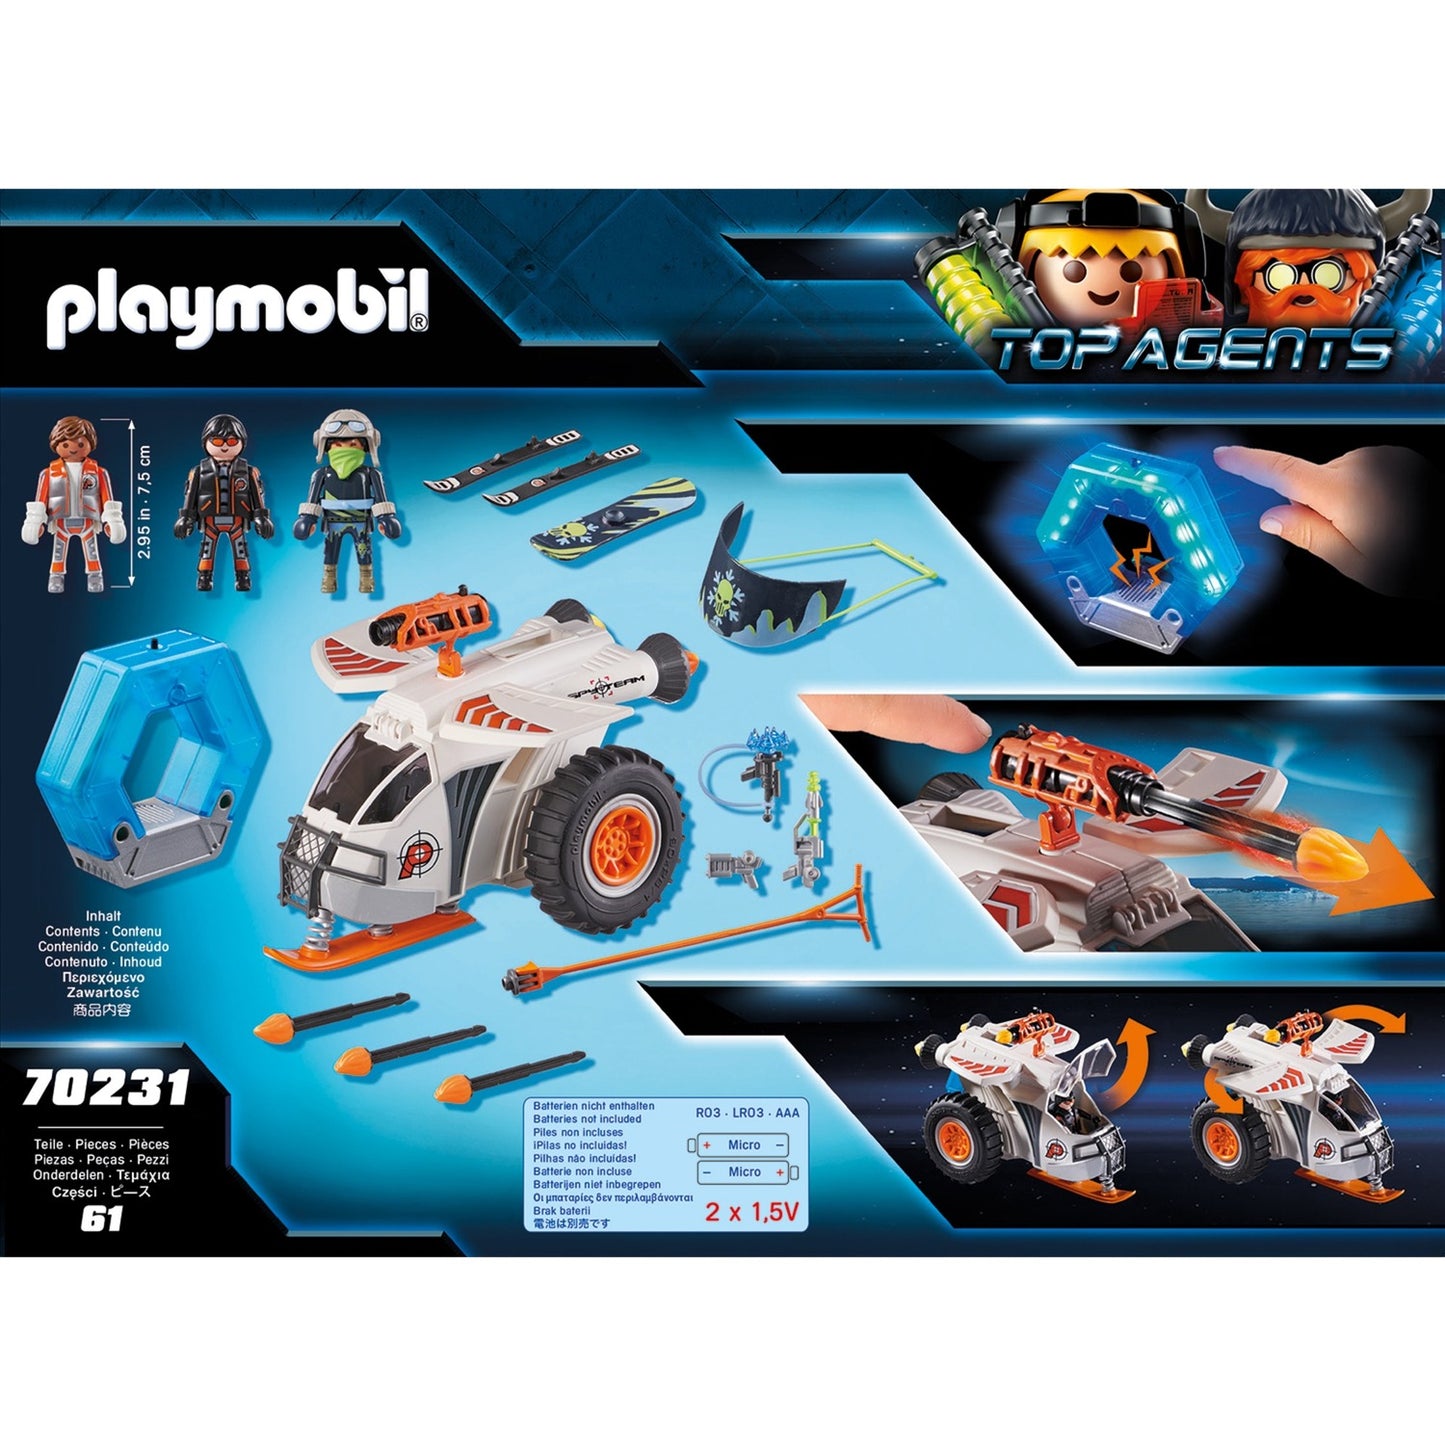 PlayMobil Top Agents Spy Team Snow Motom